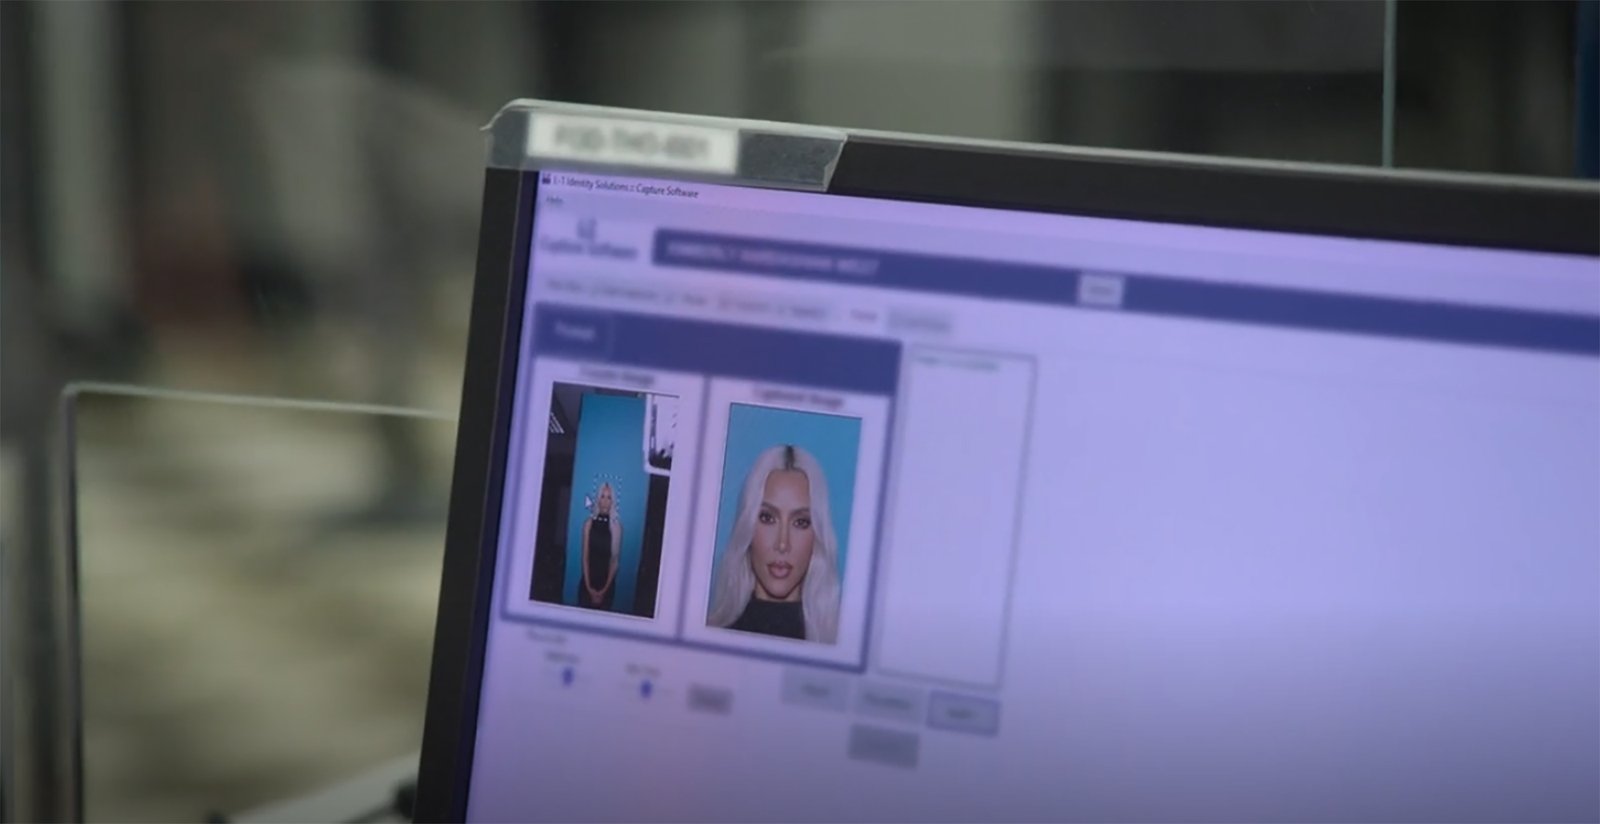 Kim Kardashian's driver's license photos